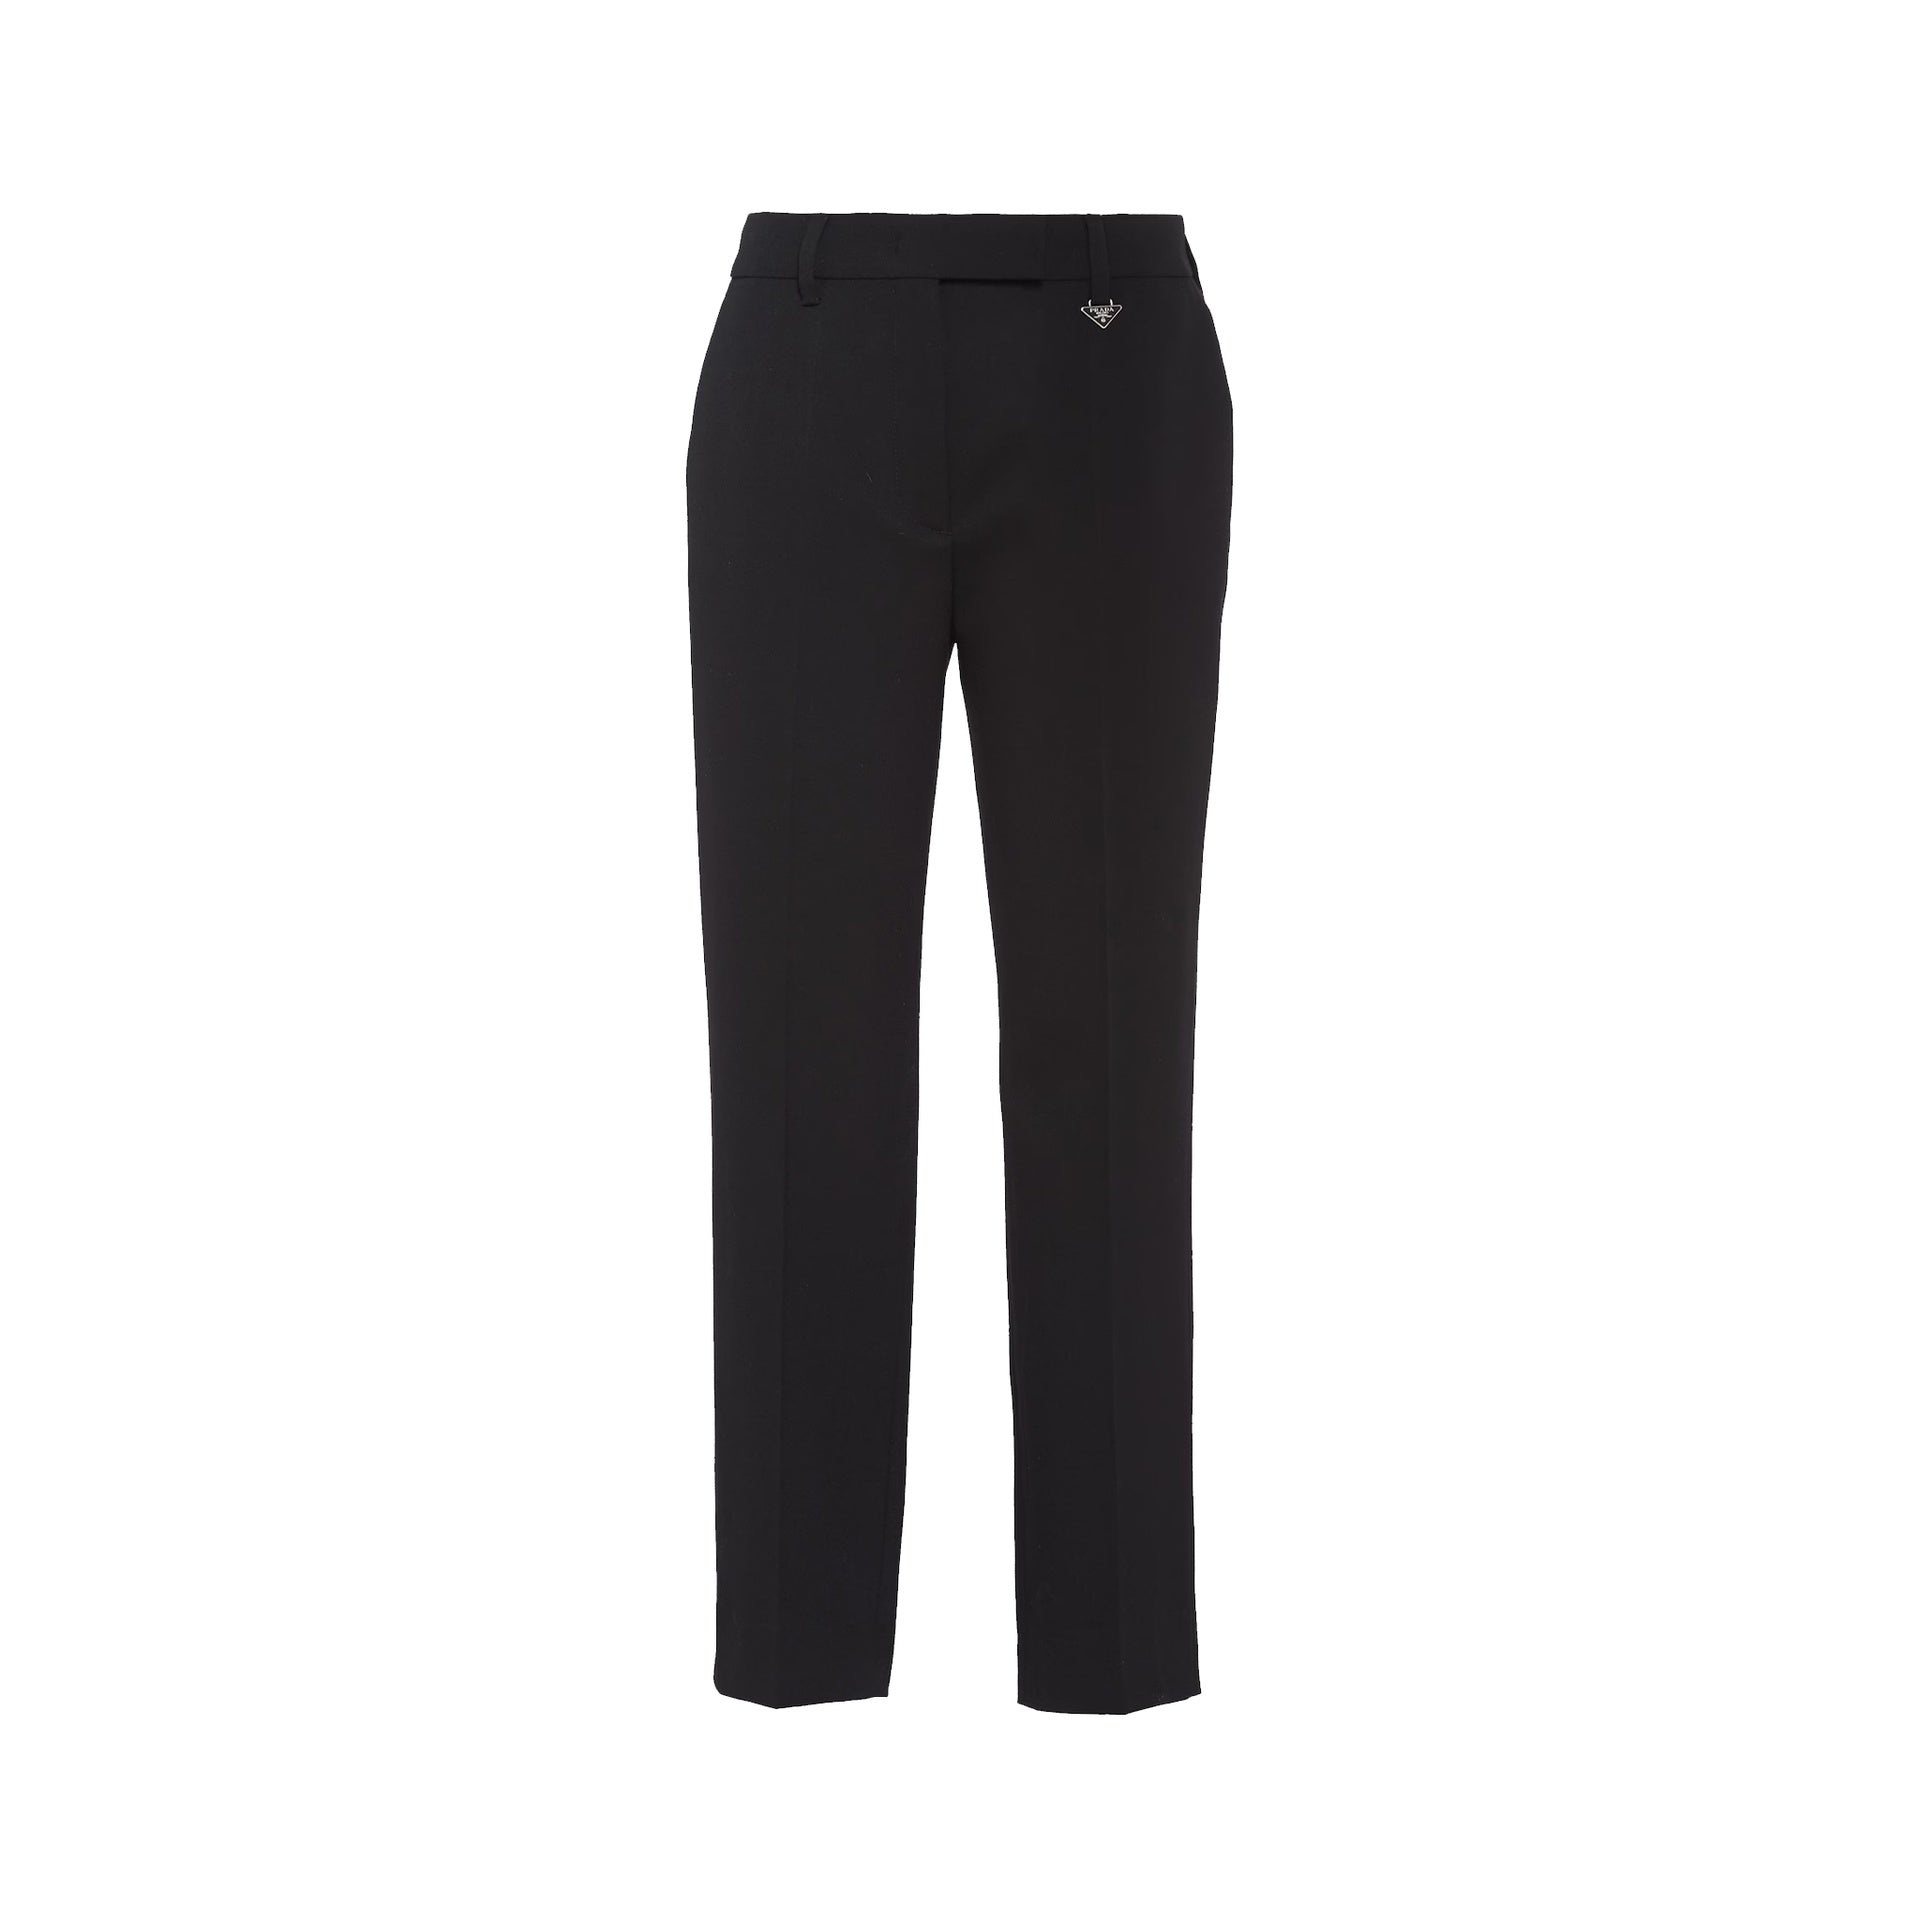 PRADA-Outlet-Sale-Prada Cropped Pants-WOMEN CLOTHING-BLACK-42-ARCHIVIST